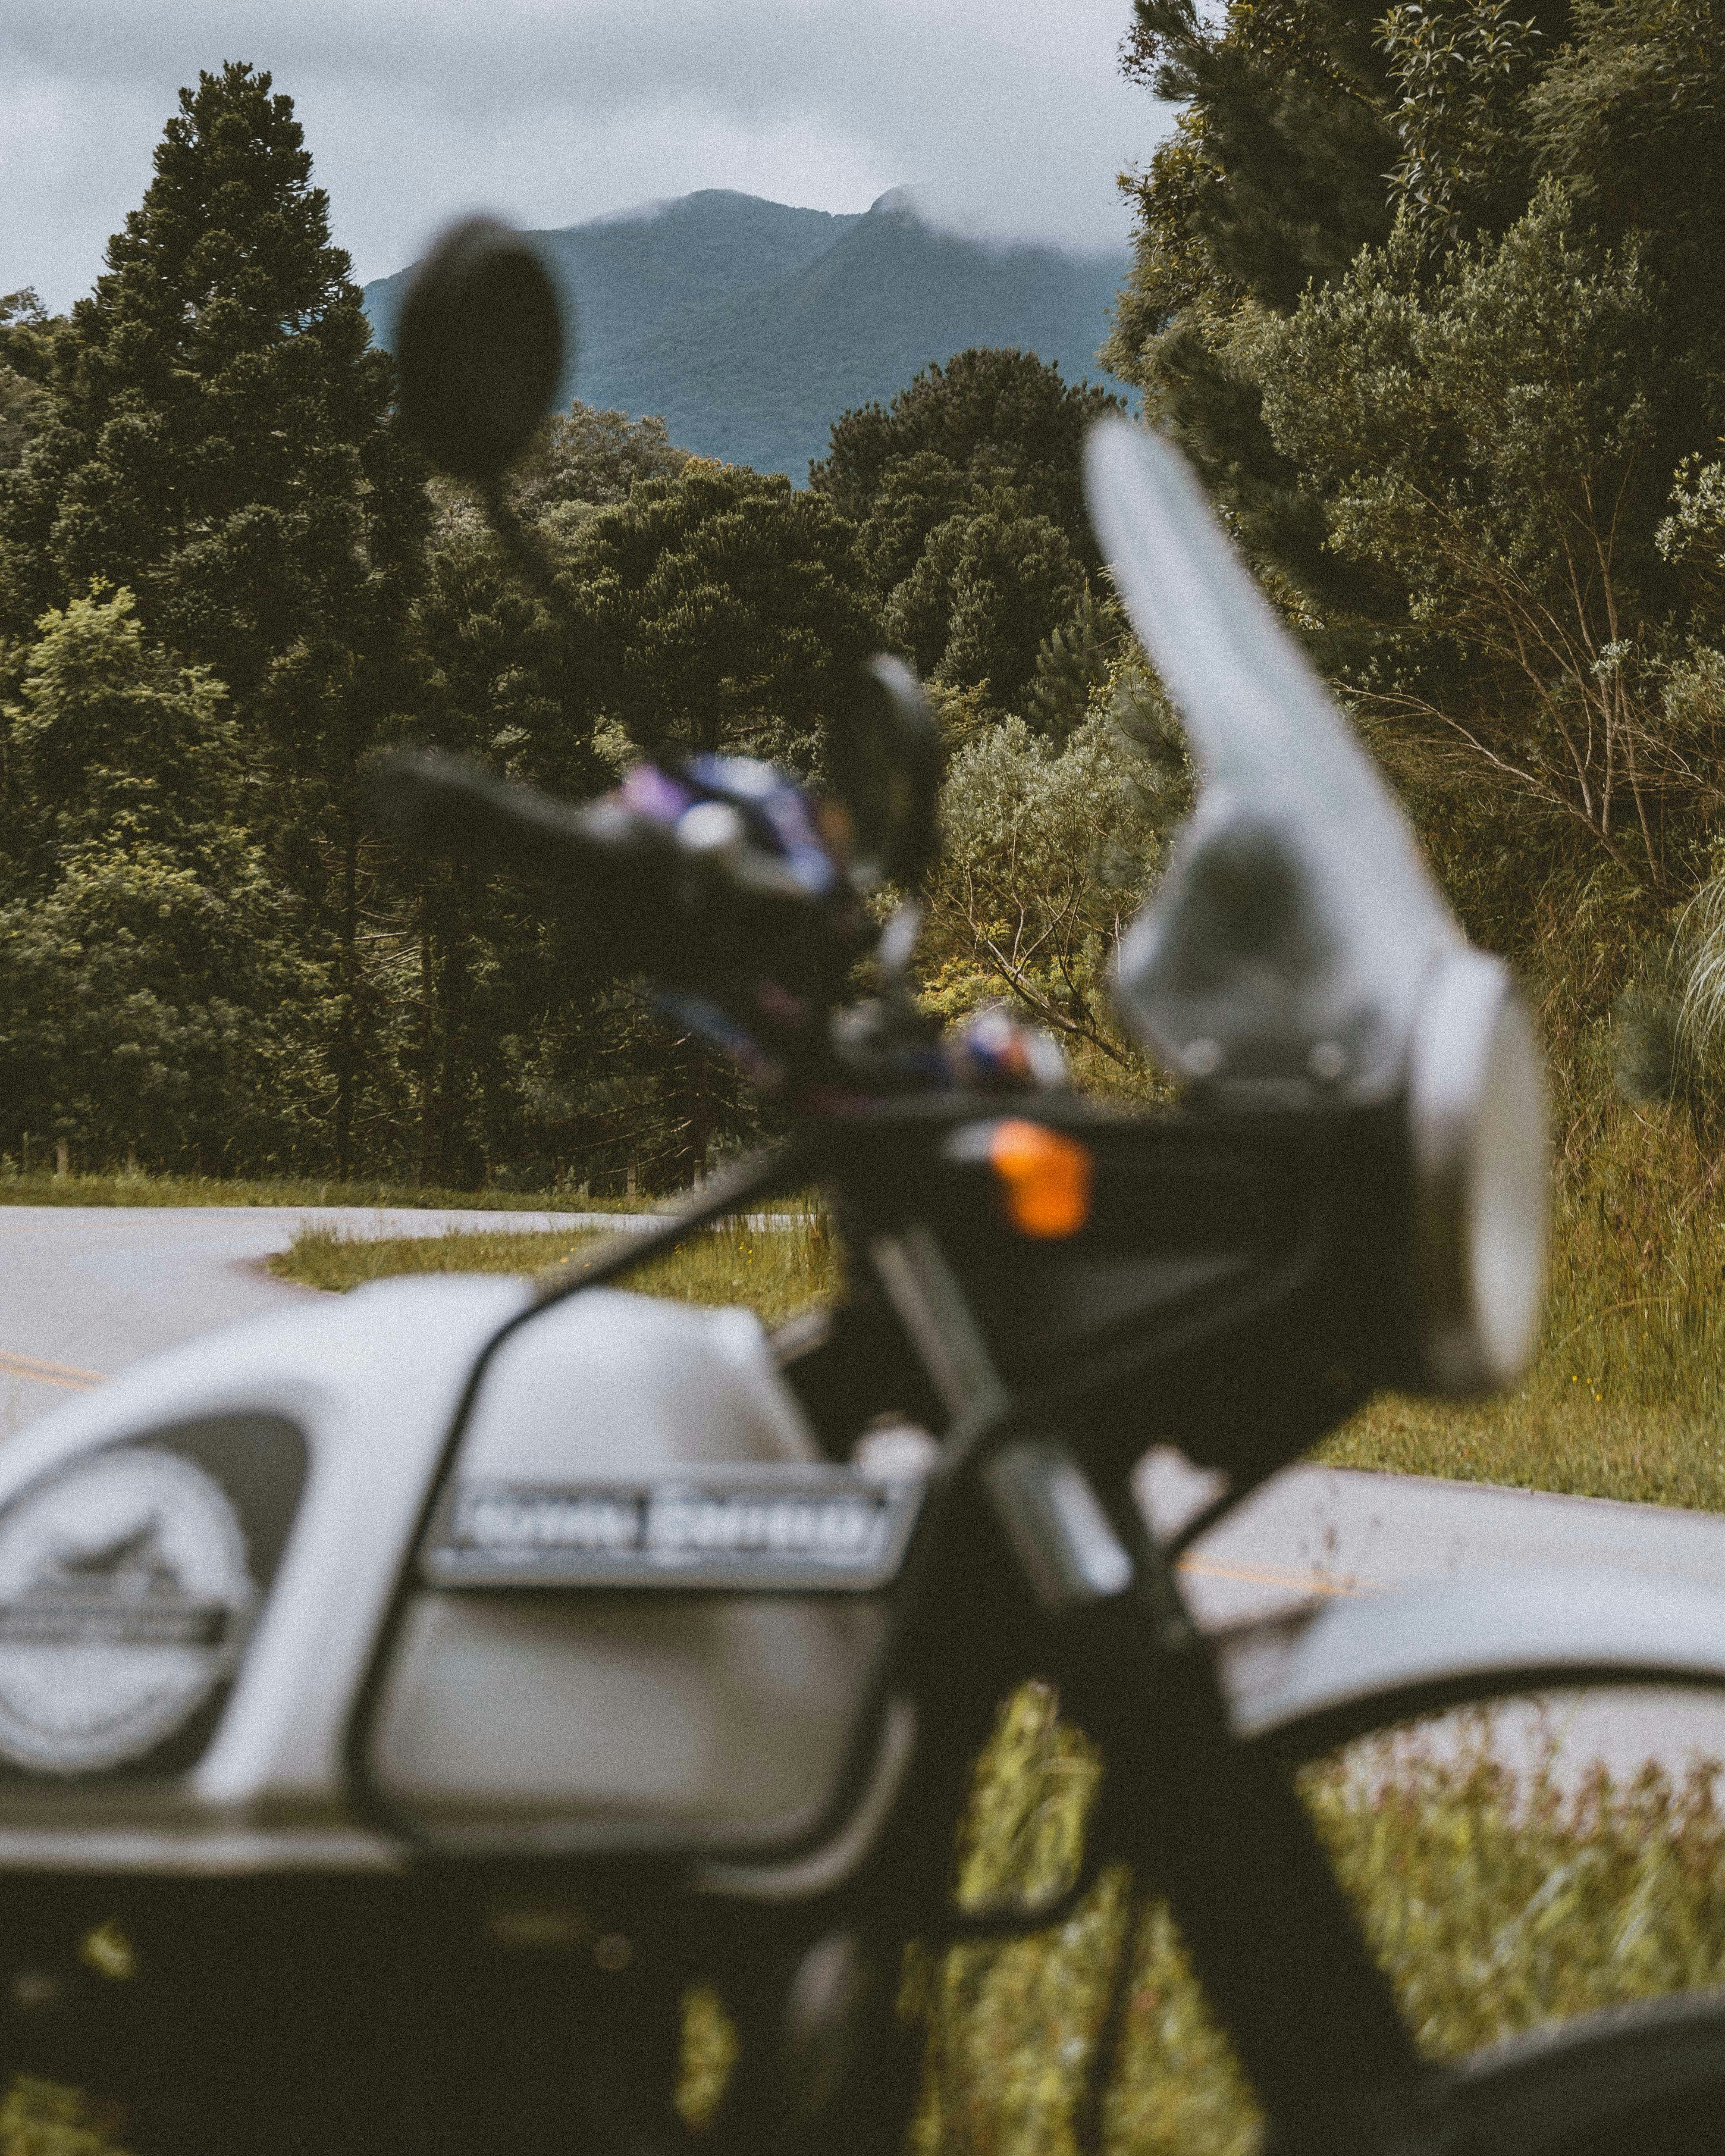 white honda motorcycle parked on gray asphalt road during daytime